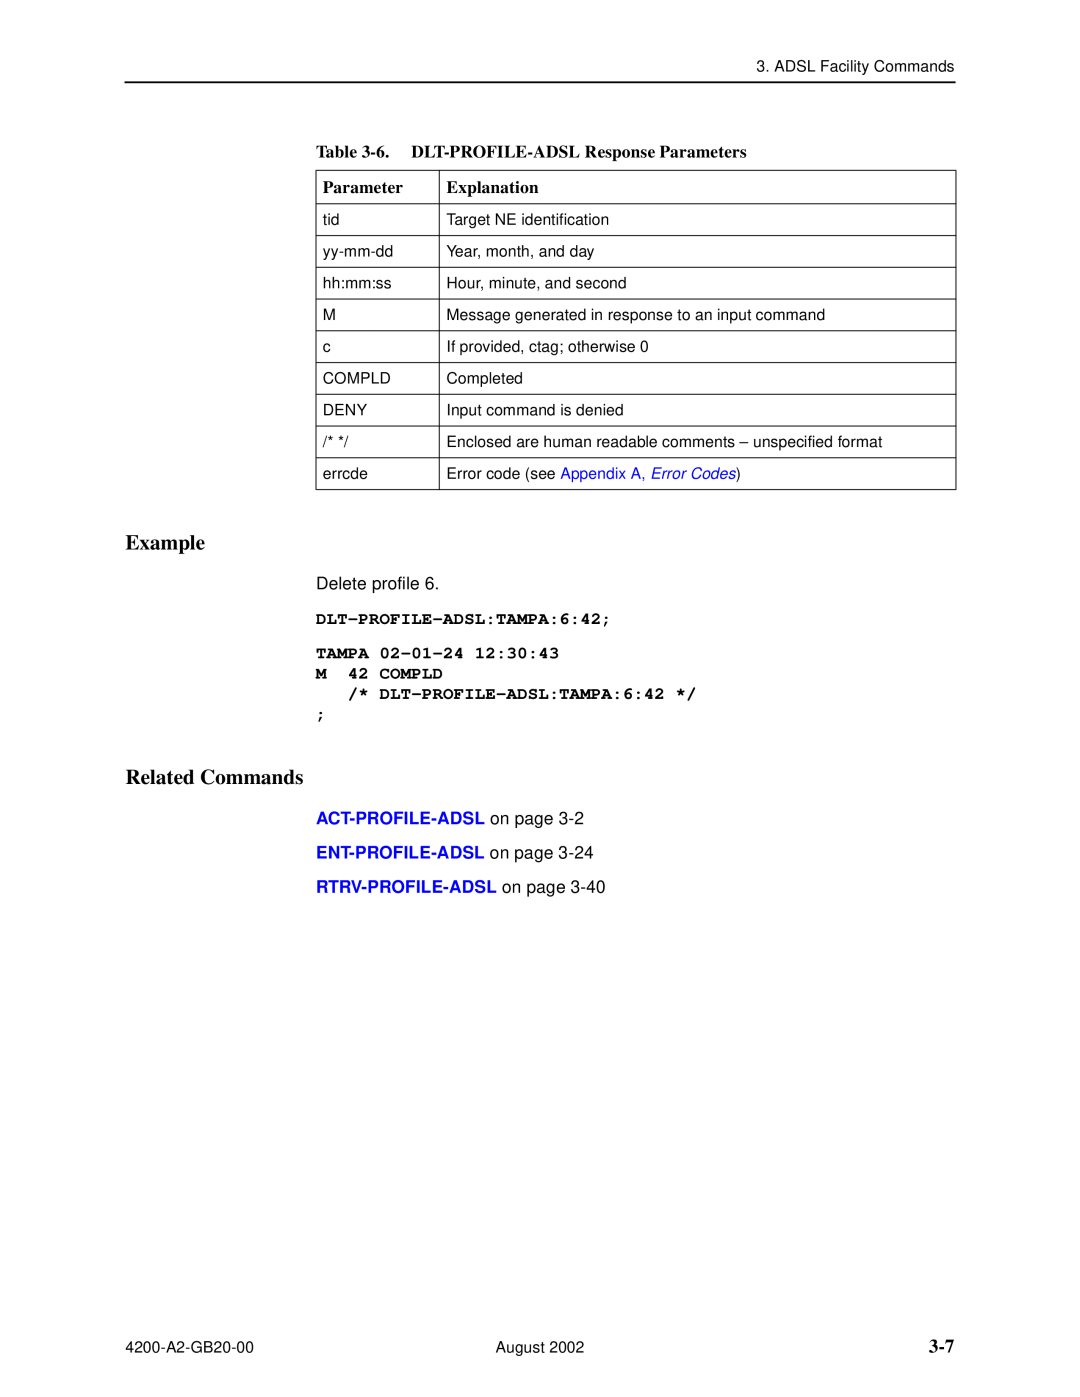 Paradyne 4200 manual DLT-PROFILE-ADSL Response Parameters, DLT-PROFILE-ADSLTAMPA642 TAMPA 02-01-24 M 42 COMPLD, Example 